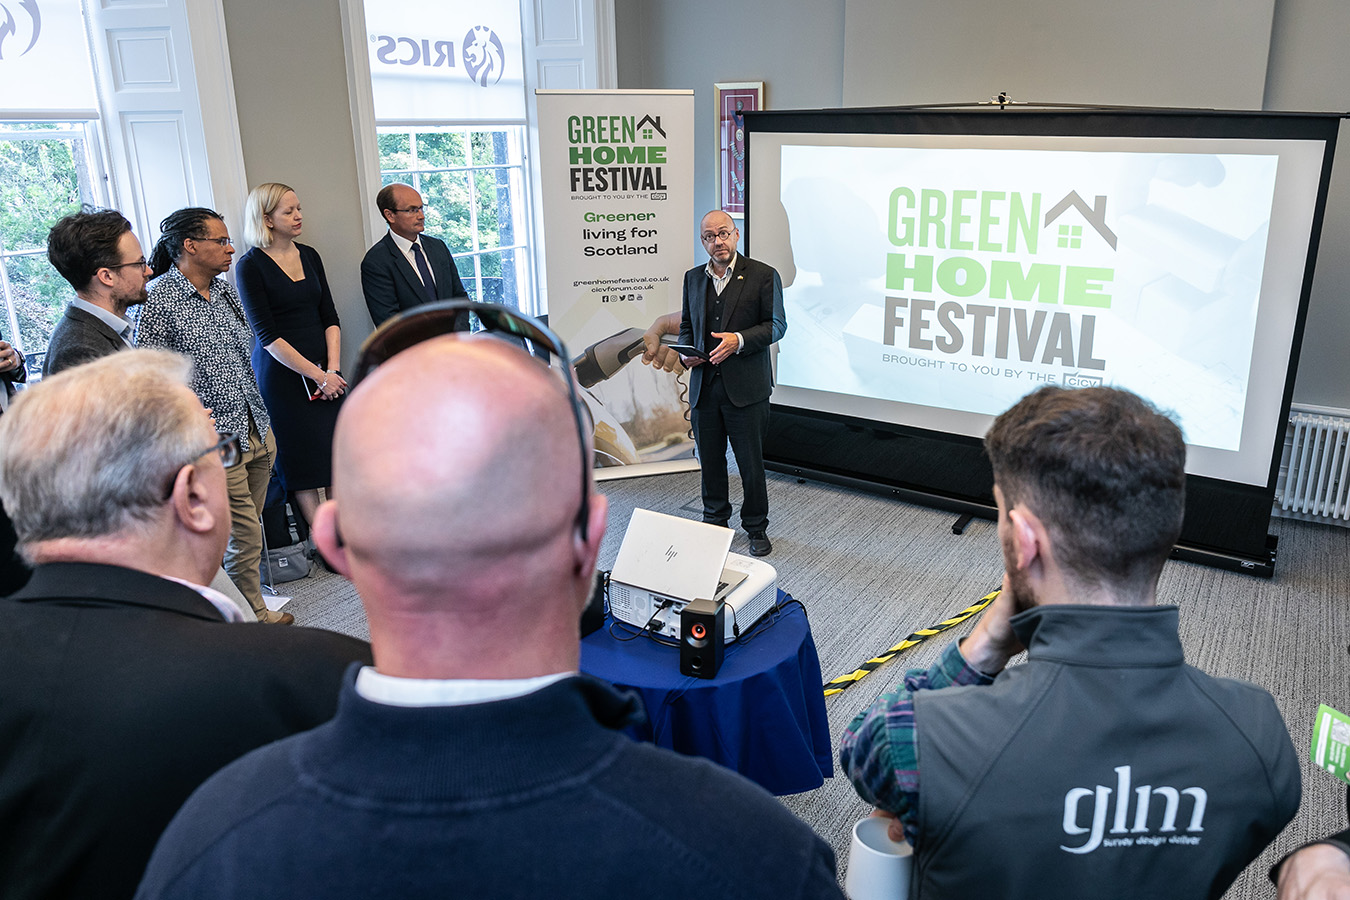 Scotland facing ‘monumental task’ on eco housing, Patrick Harvie tells Green Home Festival